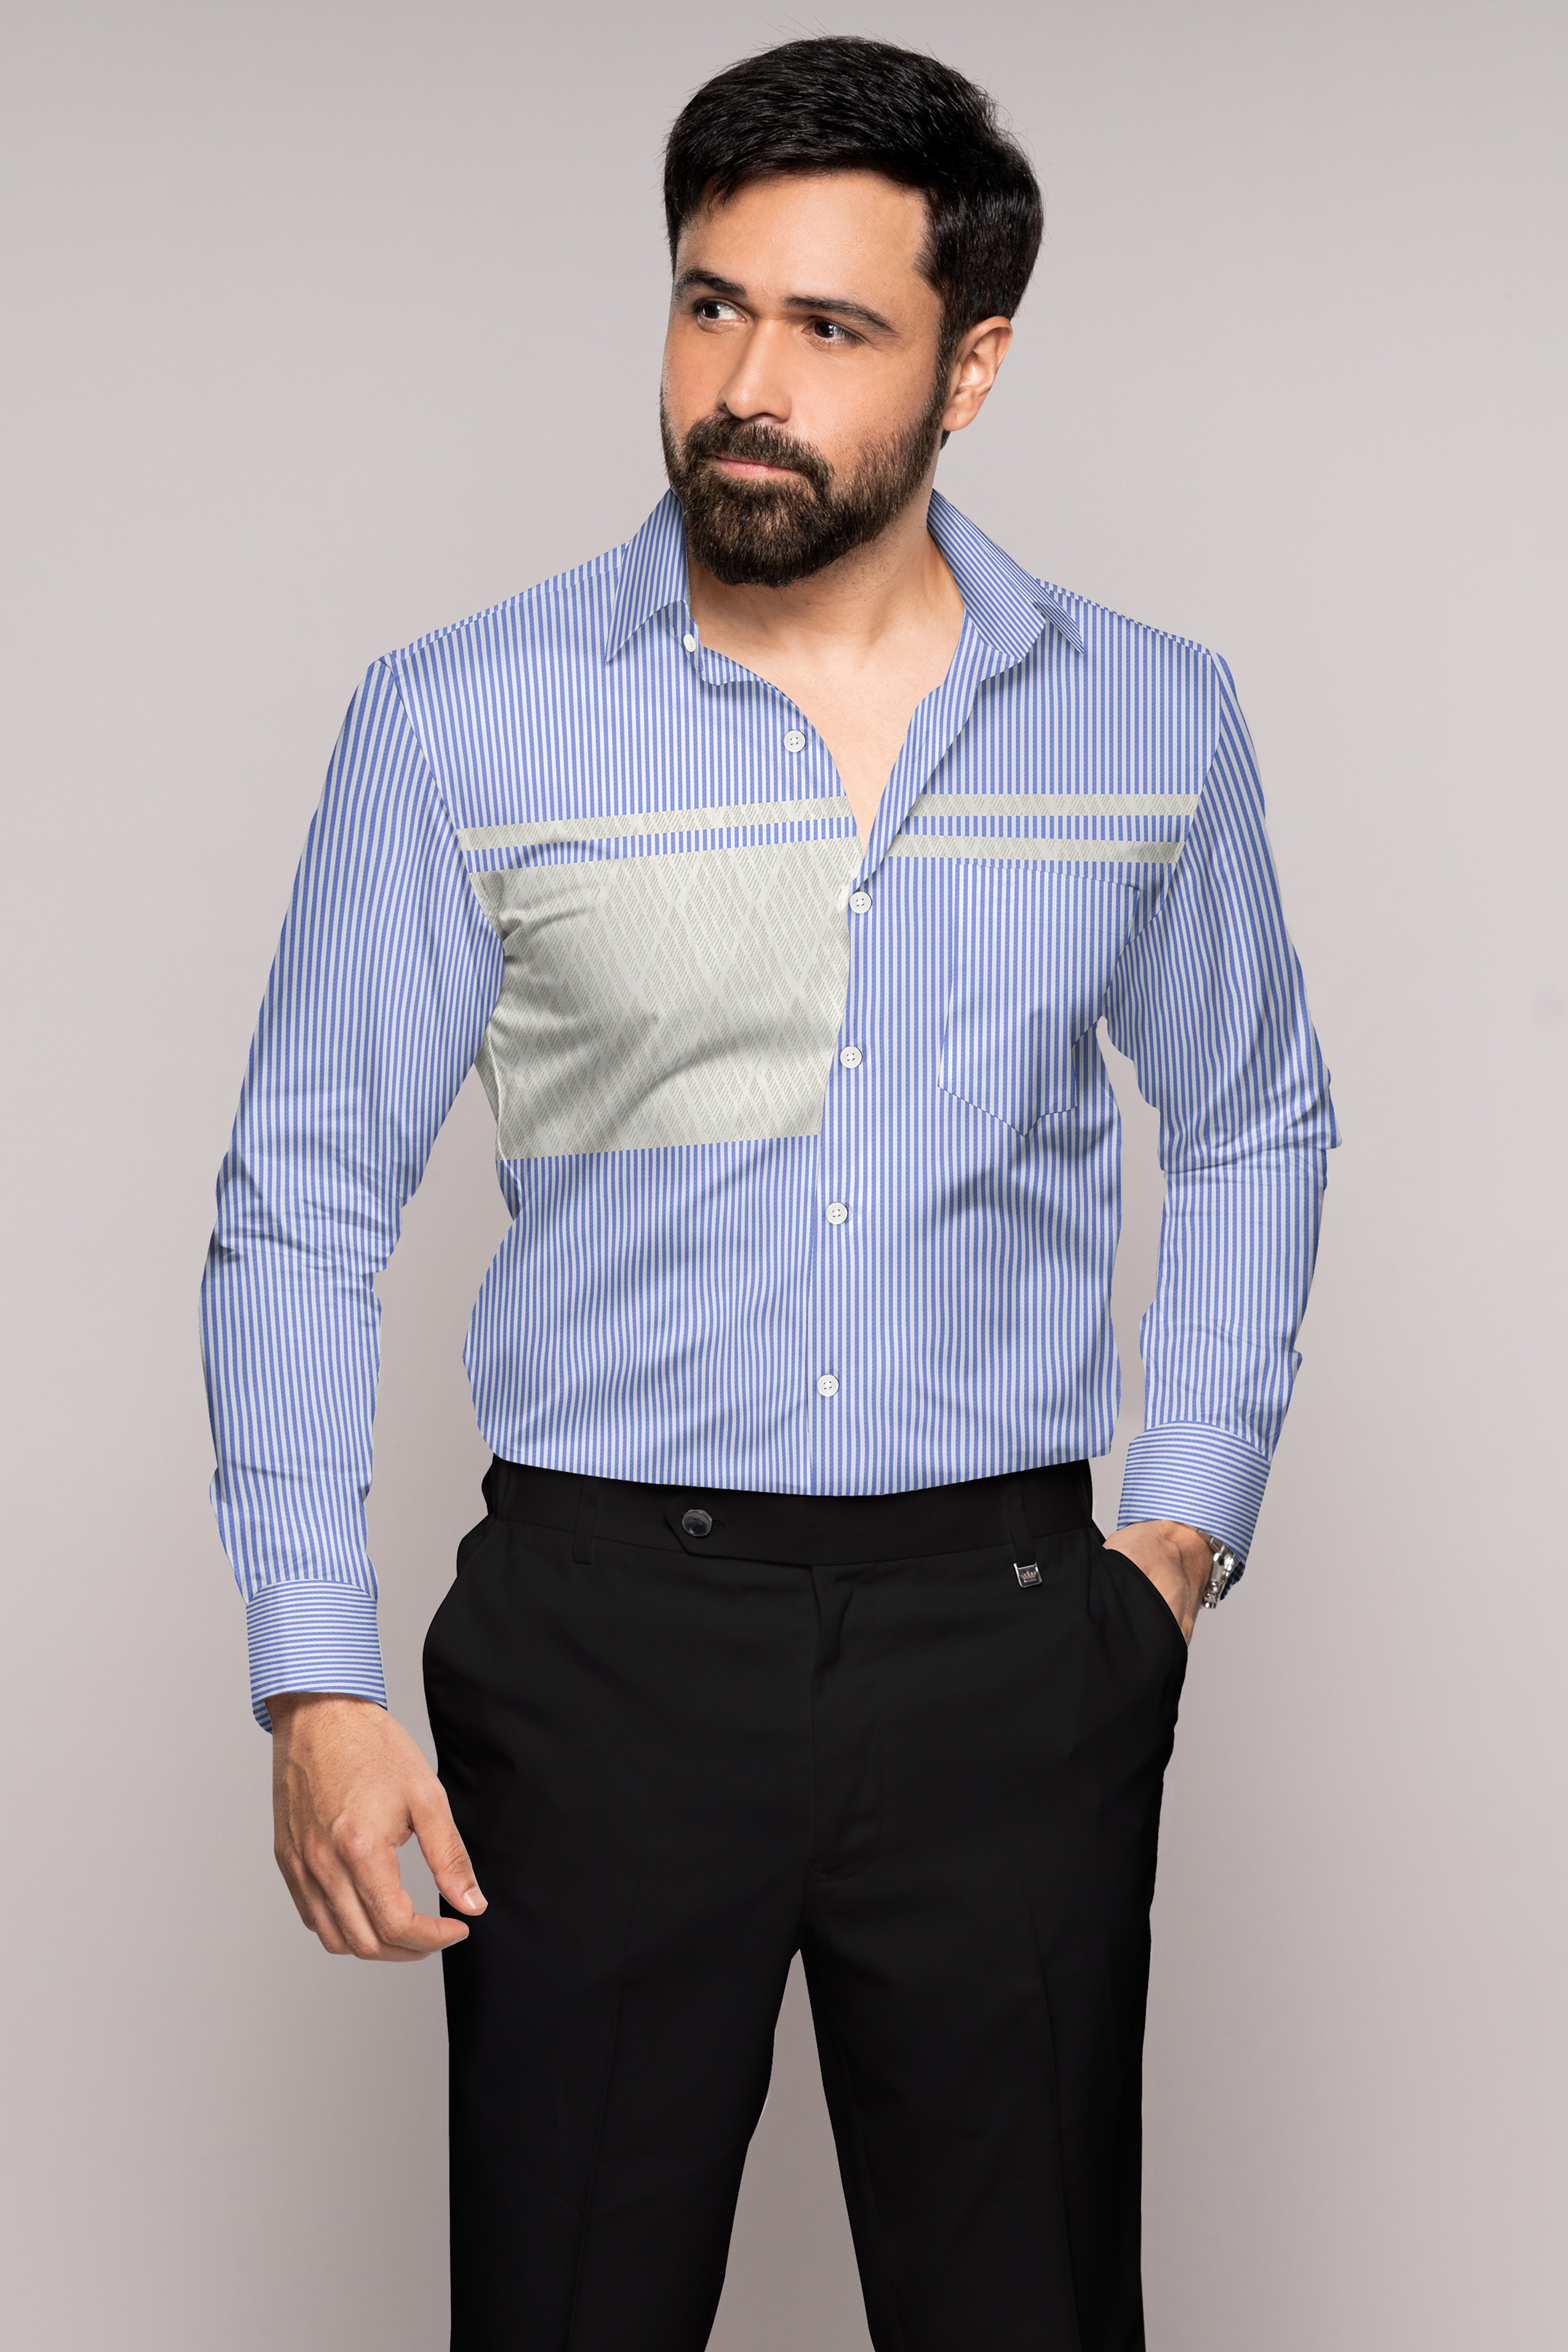 Glaucous Blue and White Striped Premium Cotton Designer Shirt